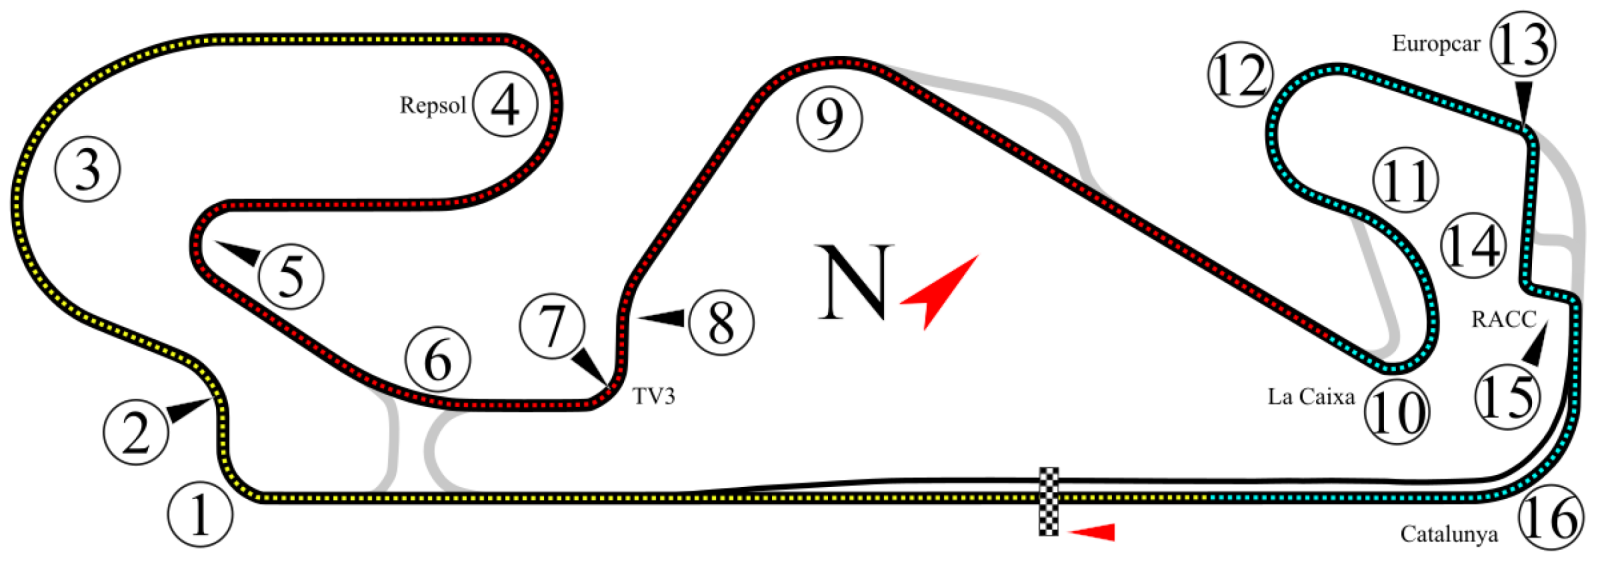 Imagen Formula1_Circuit_Catalunya_2021